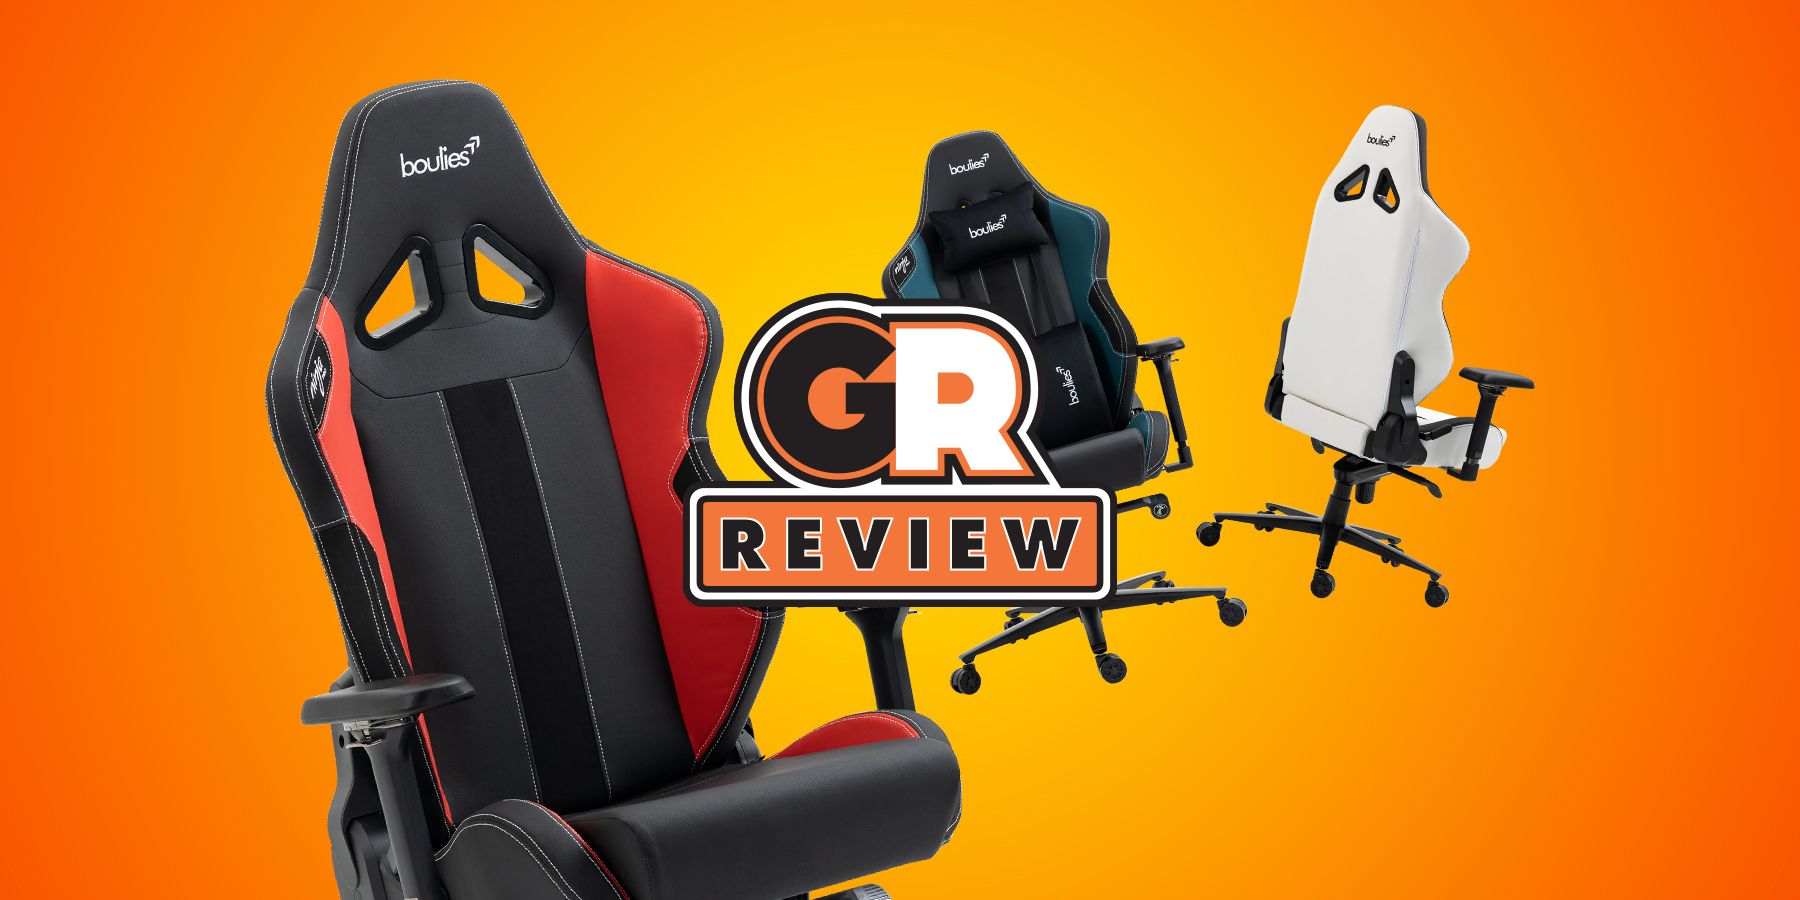 Boulies Ninja Pro Gaming Chair Review